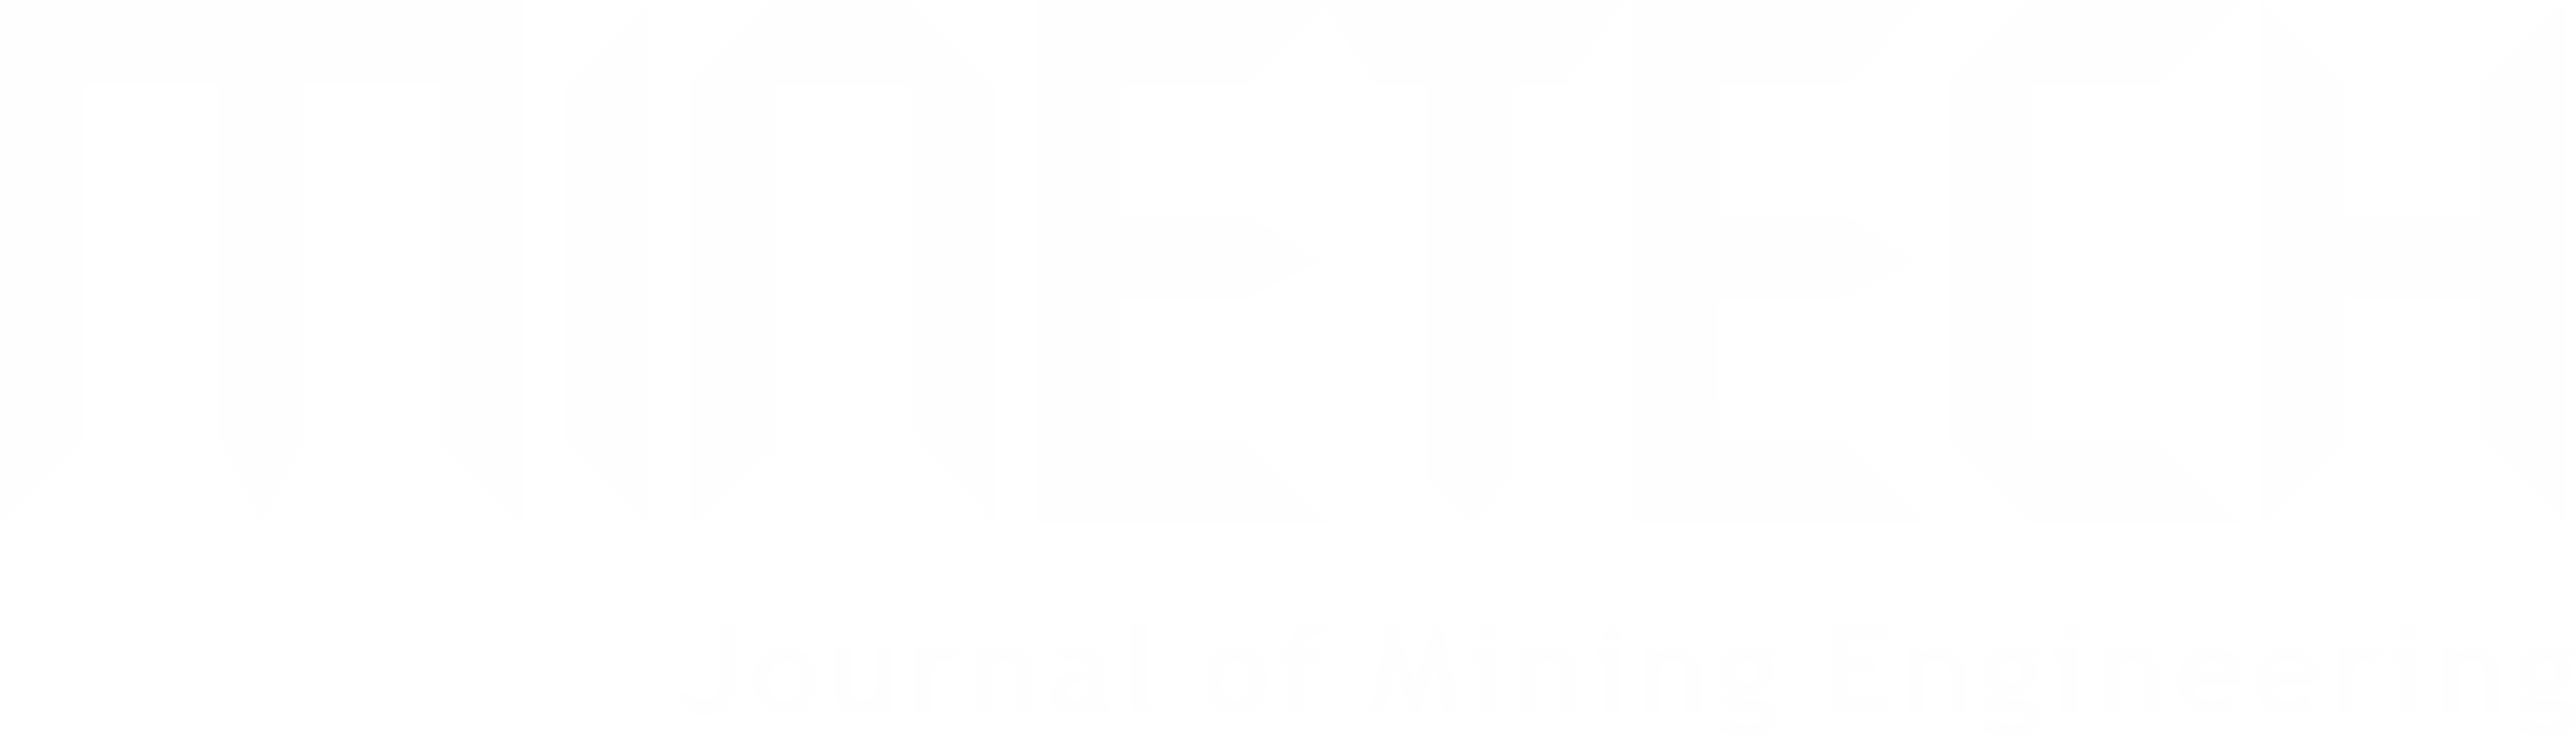 MineTech: Journal of Mining Engineering